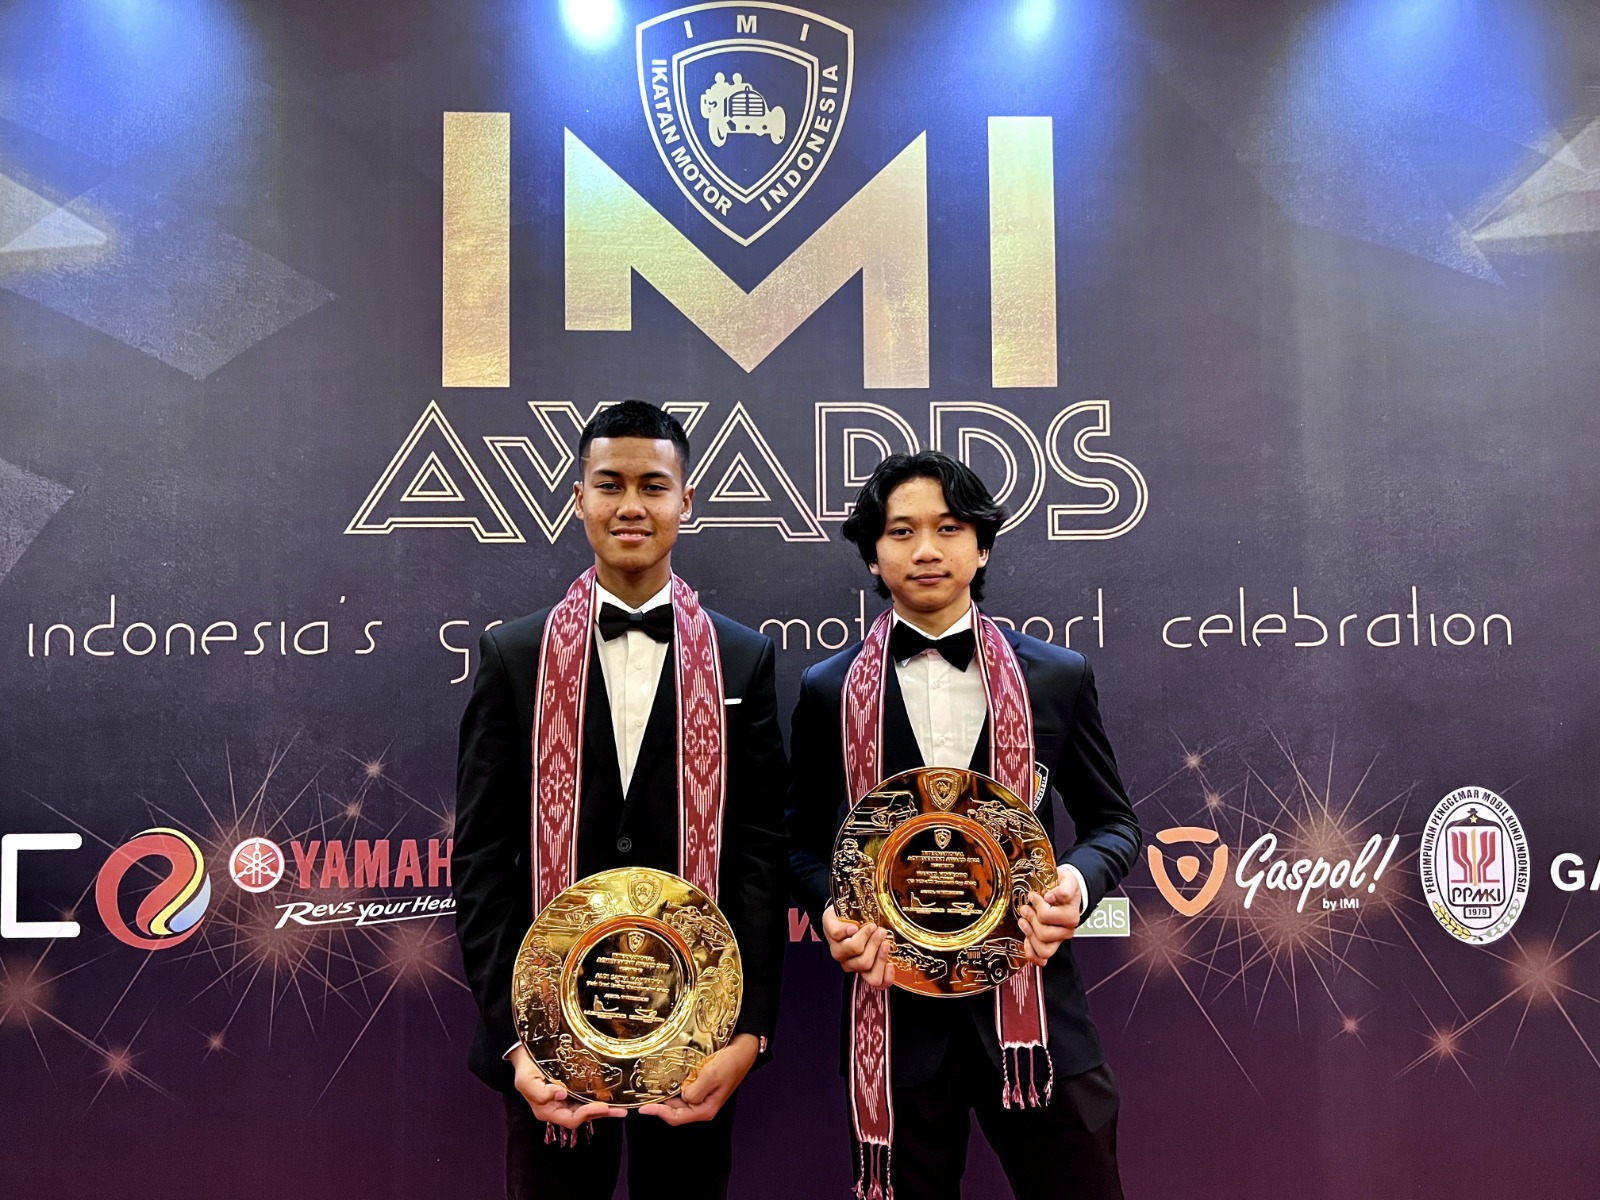 Berprestasi, Yamaha dan Pembalap Raih Penghargaan Ikatan Motor Indonesia Awards